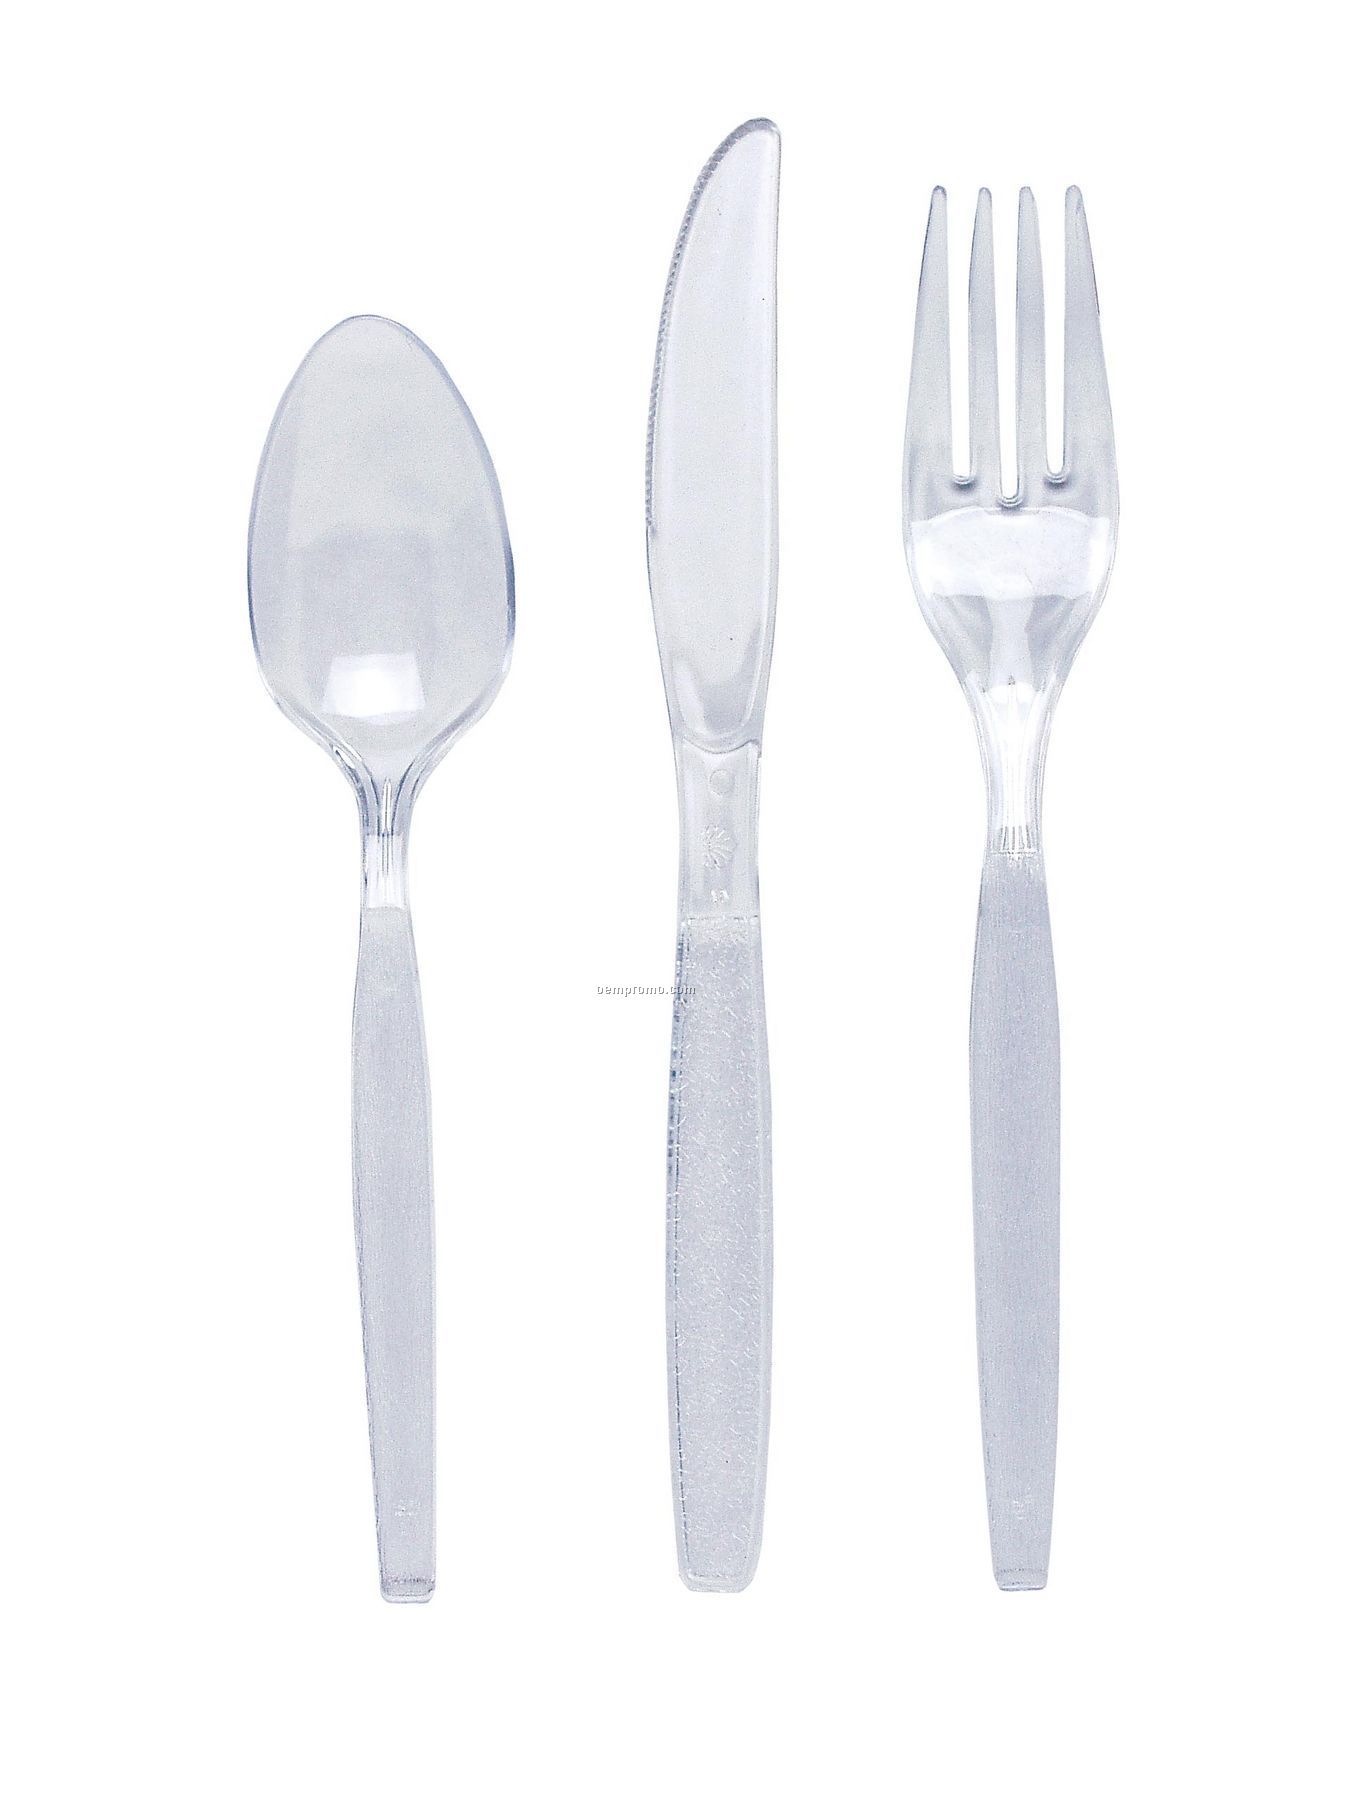 White Plastic Spoon - 5.75